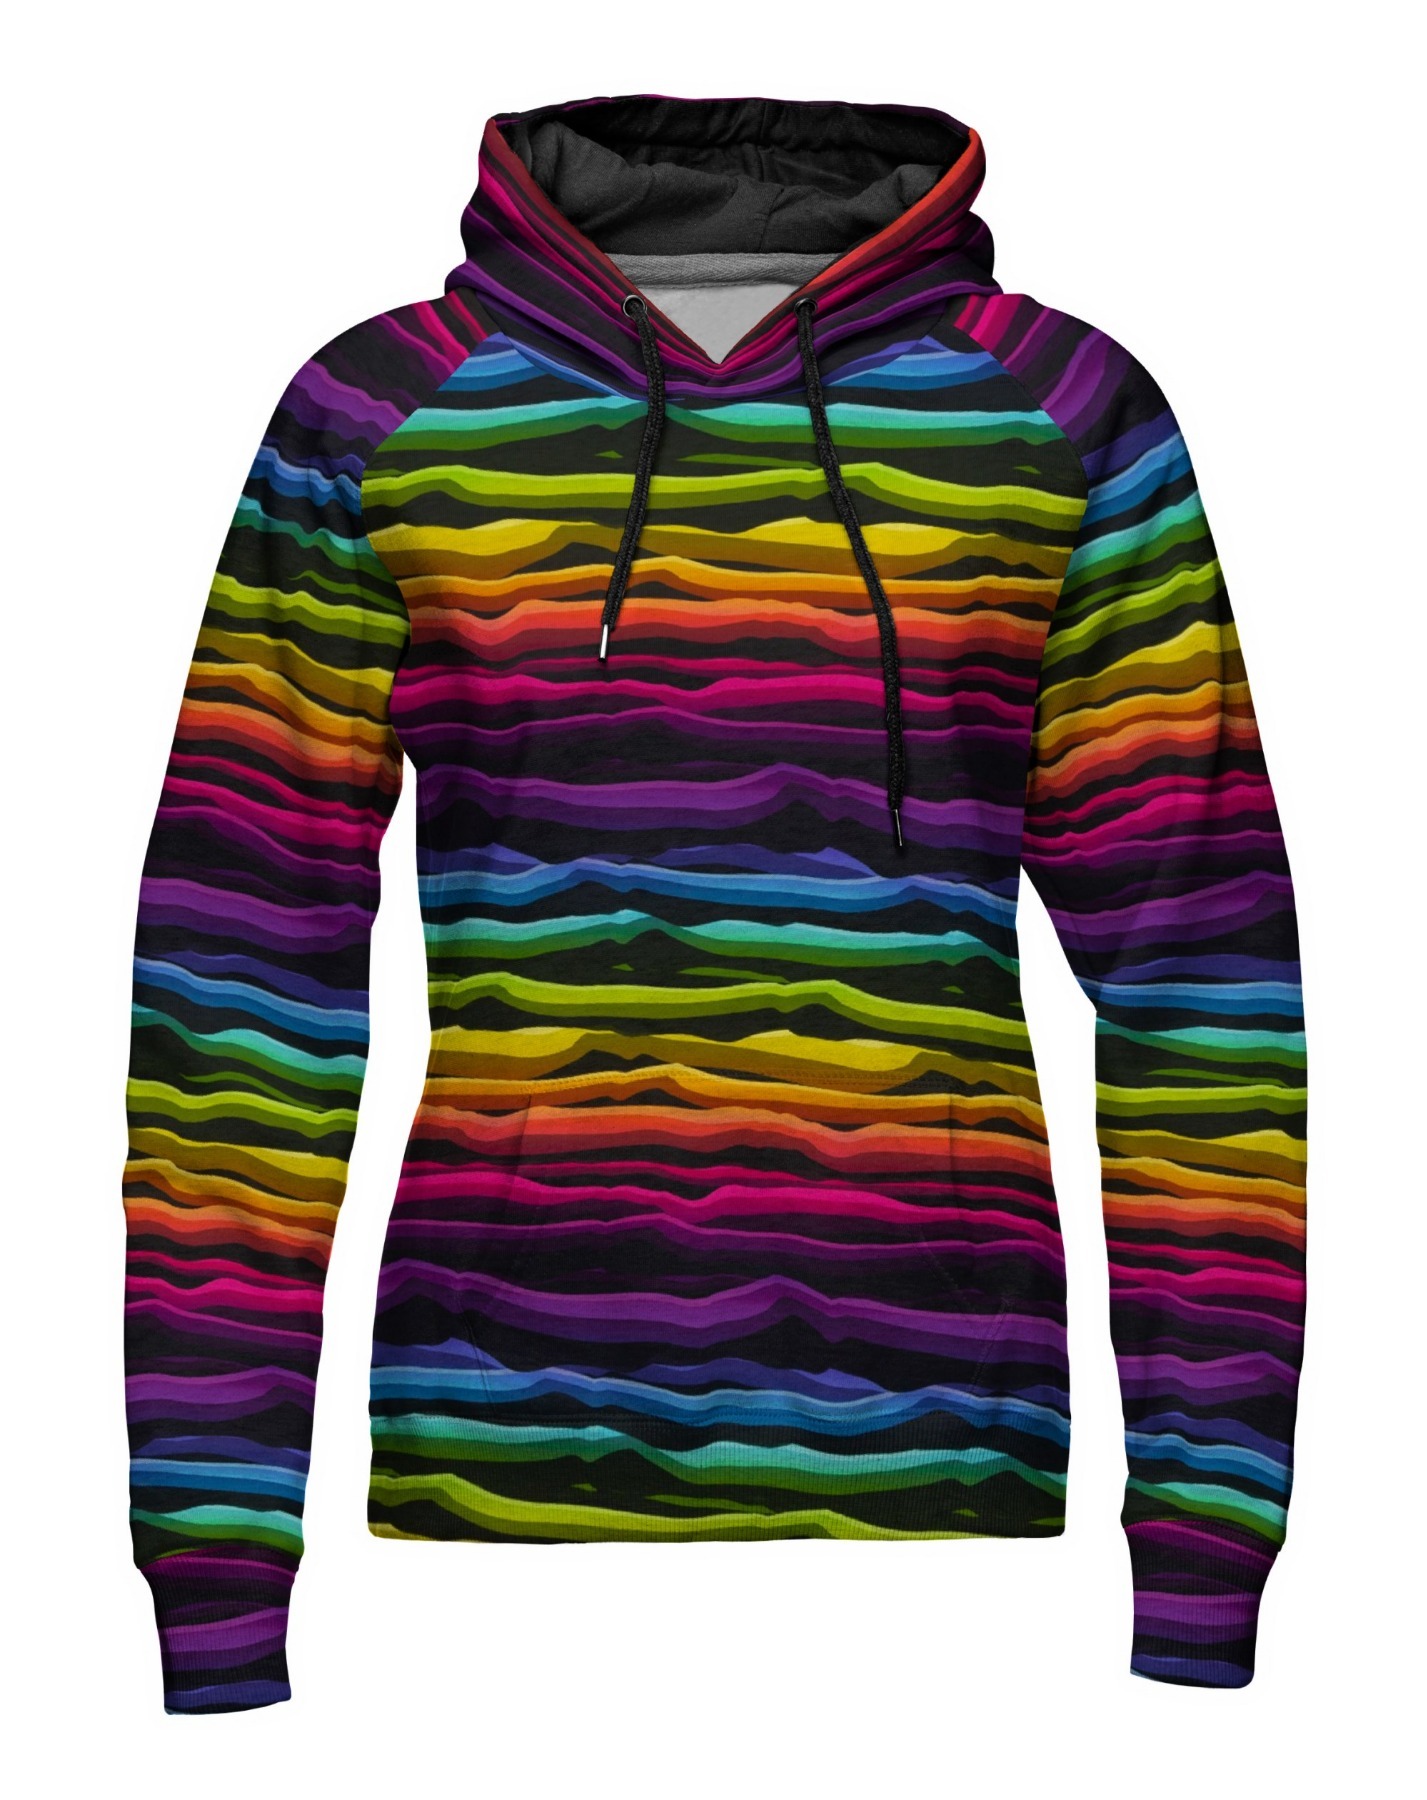 05m Sweat Wavy Stripes by Lycklig Design Regenbogen rainbow bunt 4